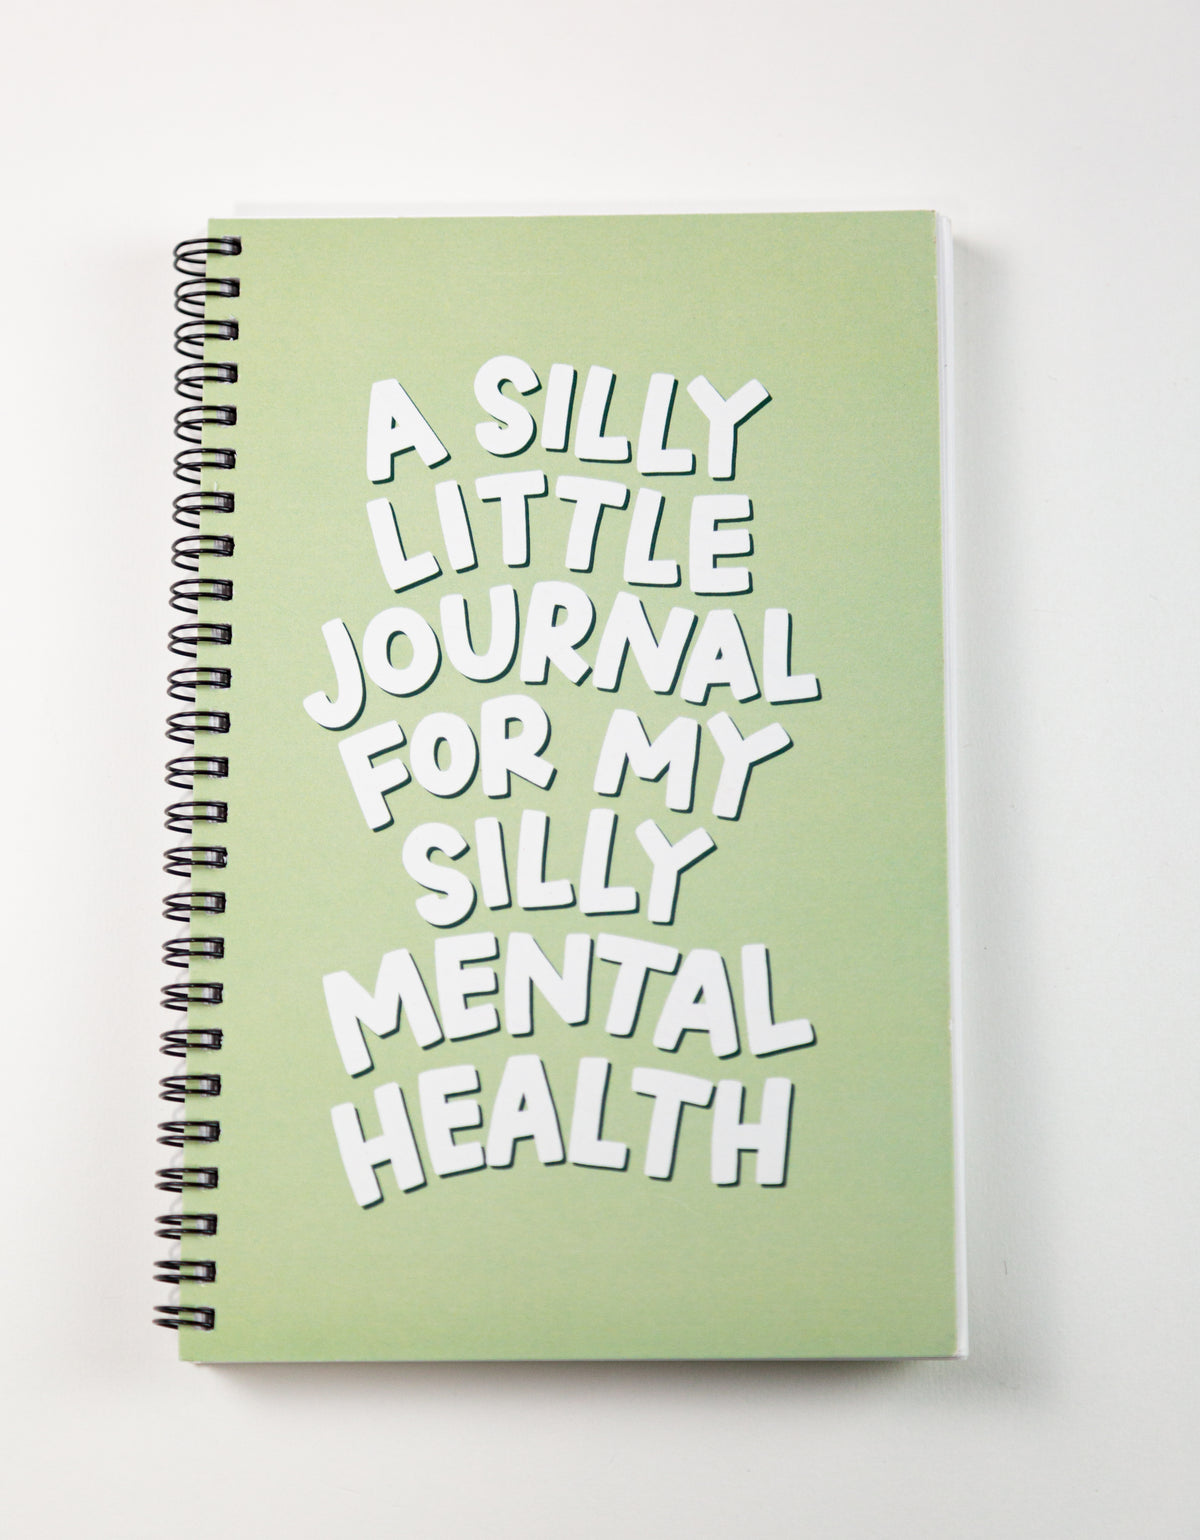 Silly Little Mental Health Journal